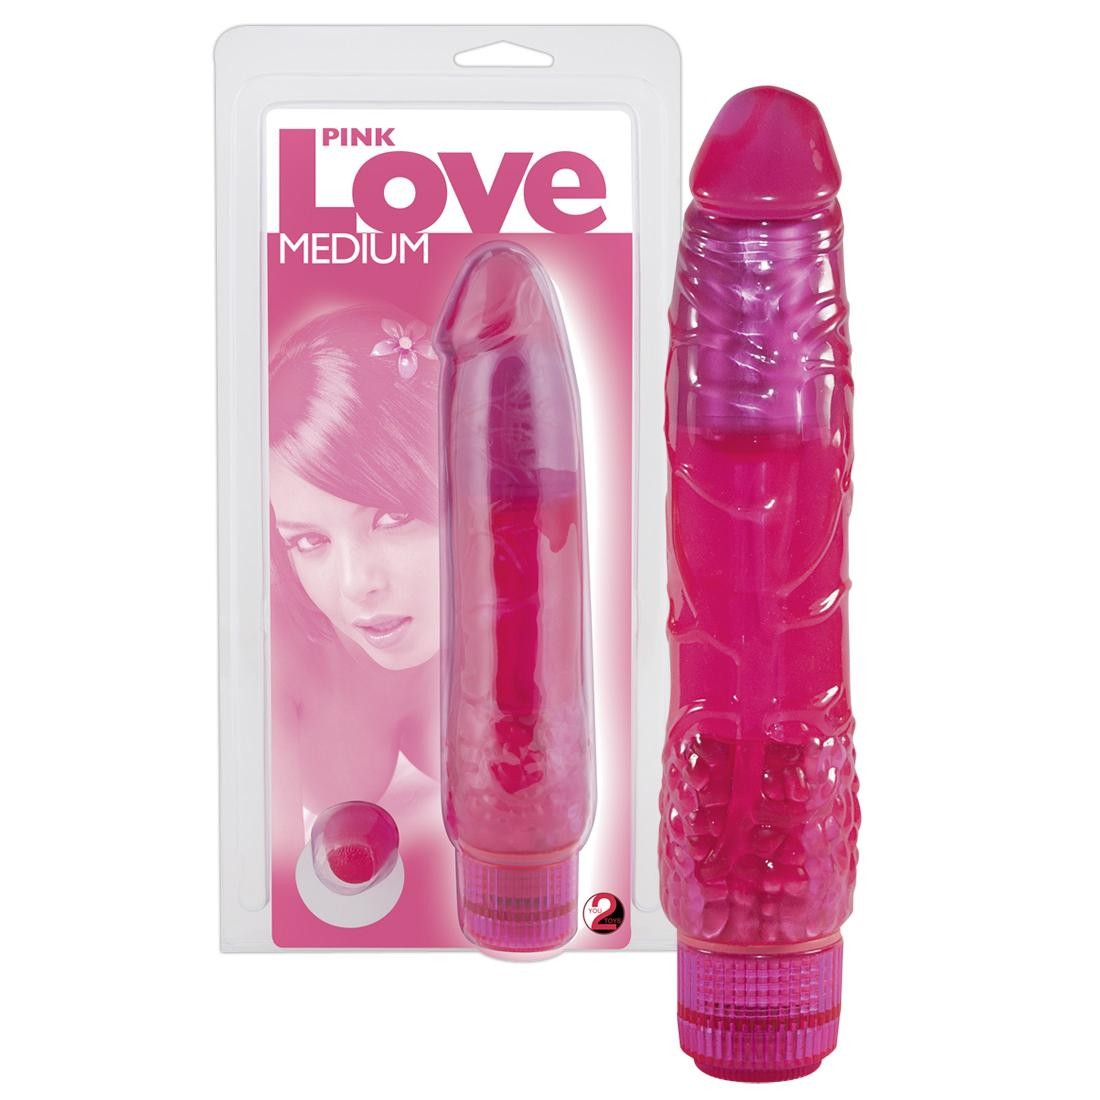  You2Toys  -  Pink  Love  medium  -  Vibrator 